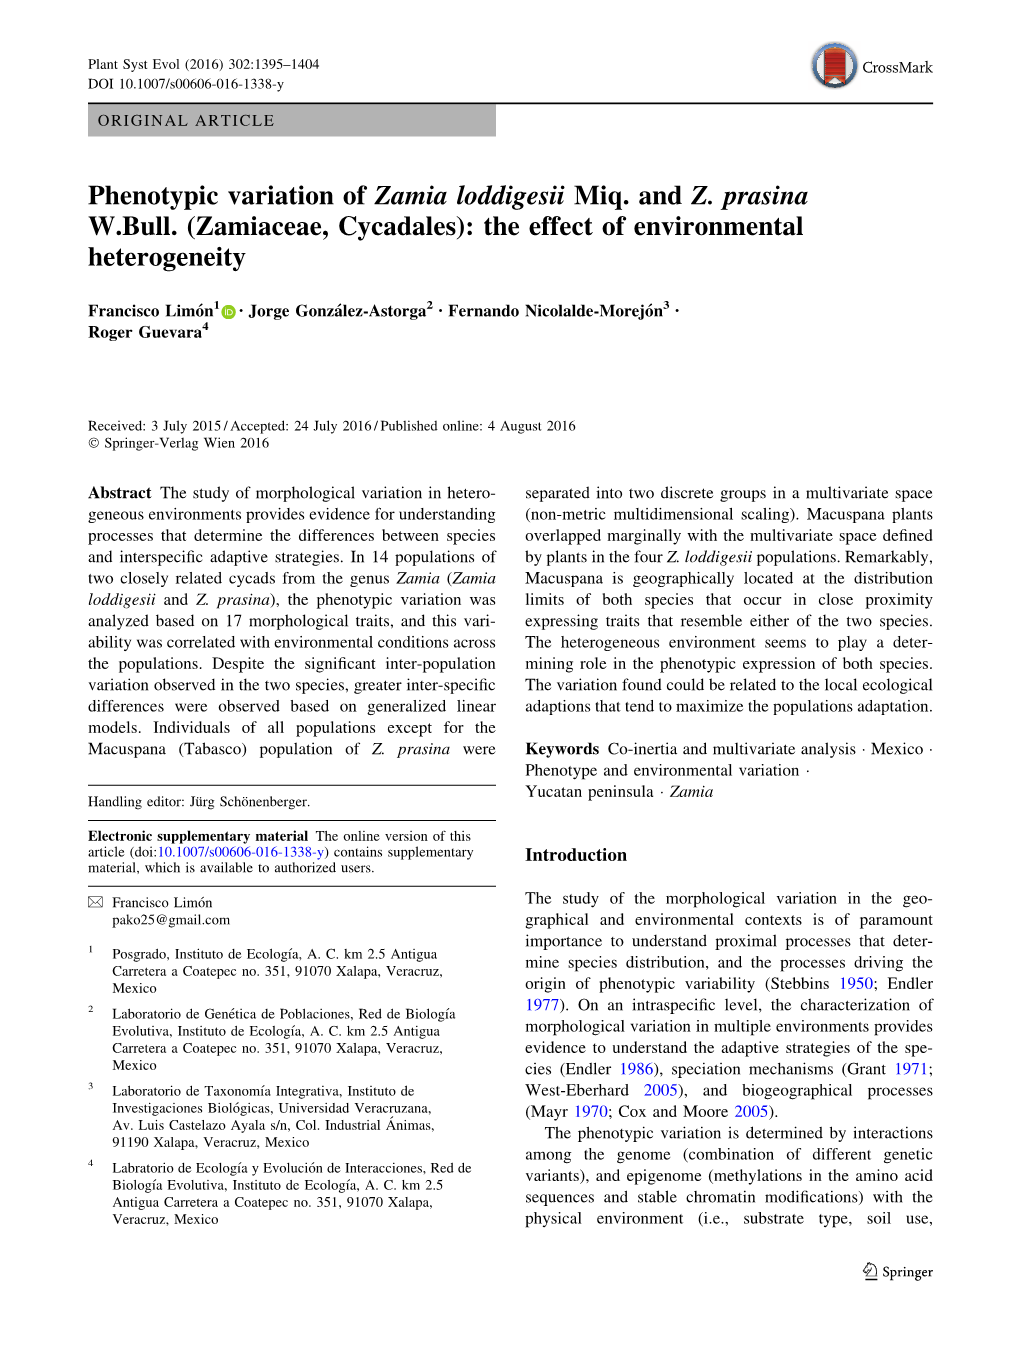 Phenotypic Variation of Zamia Loddigesii Miq. and Z. Prasina W.Bull. (Zamiaceae, Cycadales): the Effect of Environmental Heterogeneity